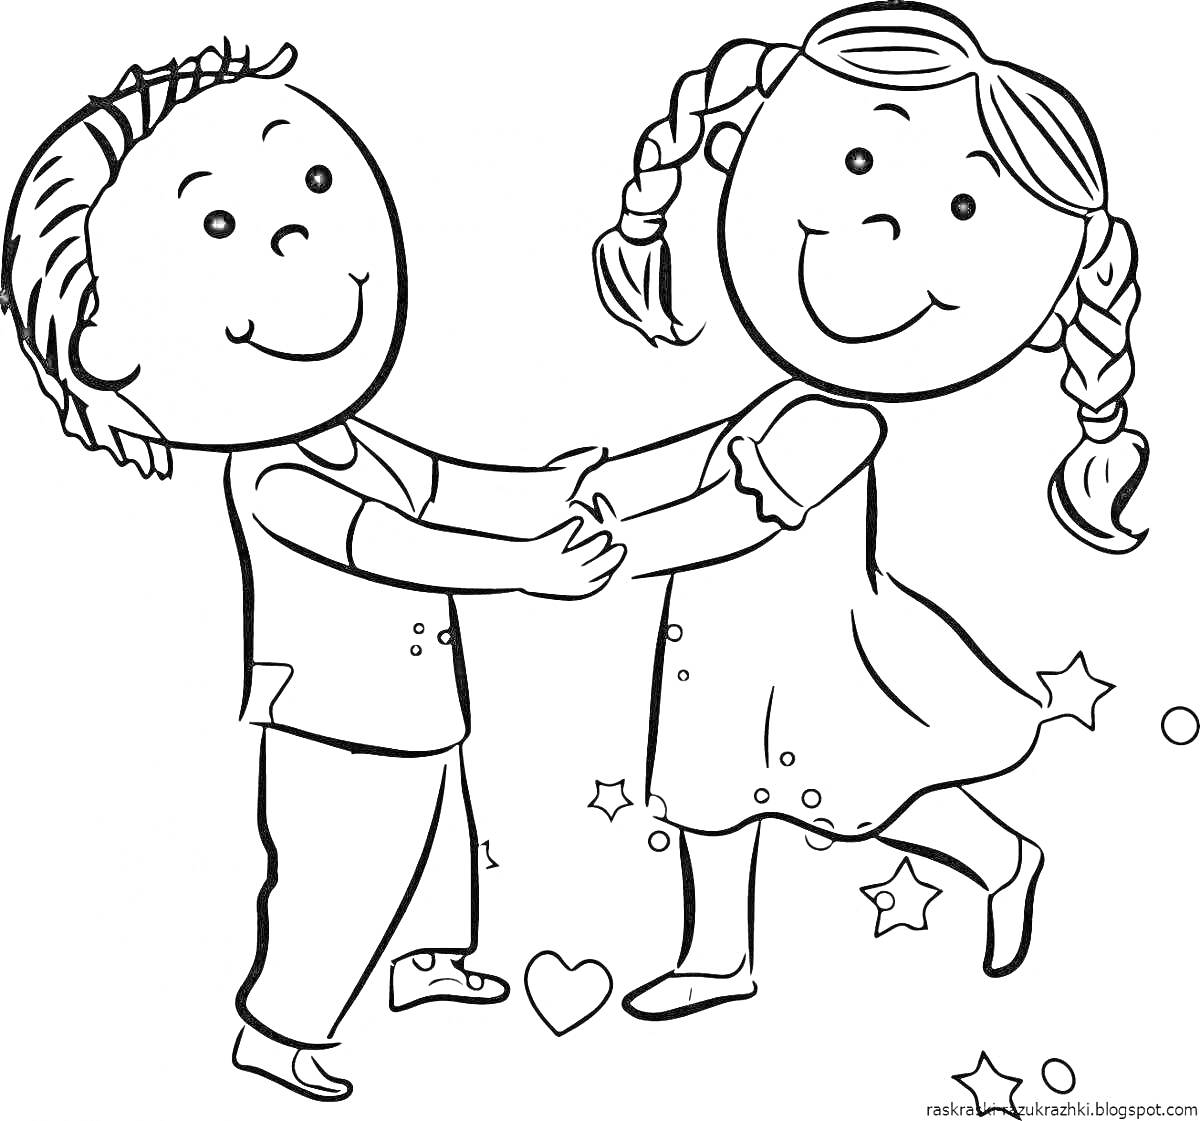 Раскраска Двое детей танцуют, держась за руки, на фоне звезд и сердечка